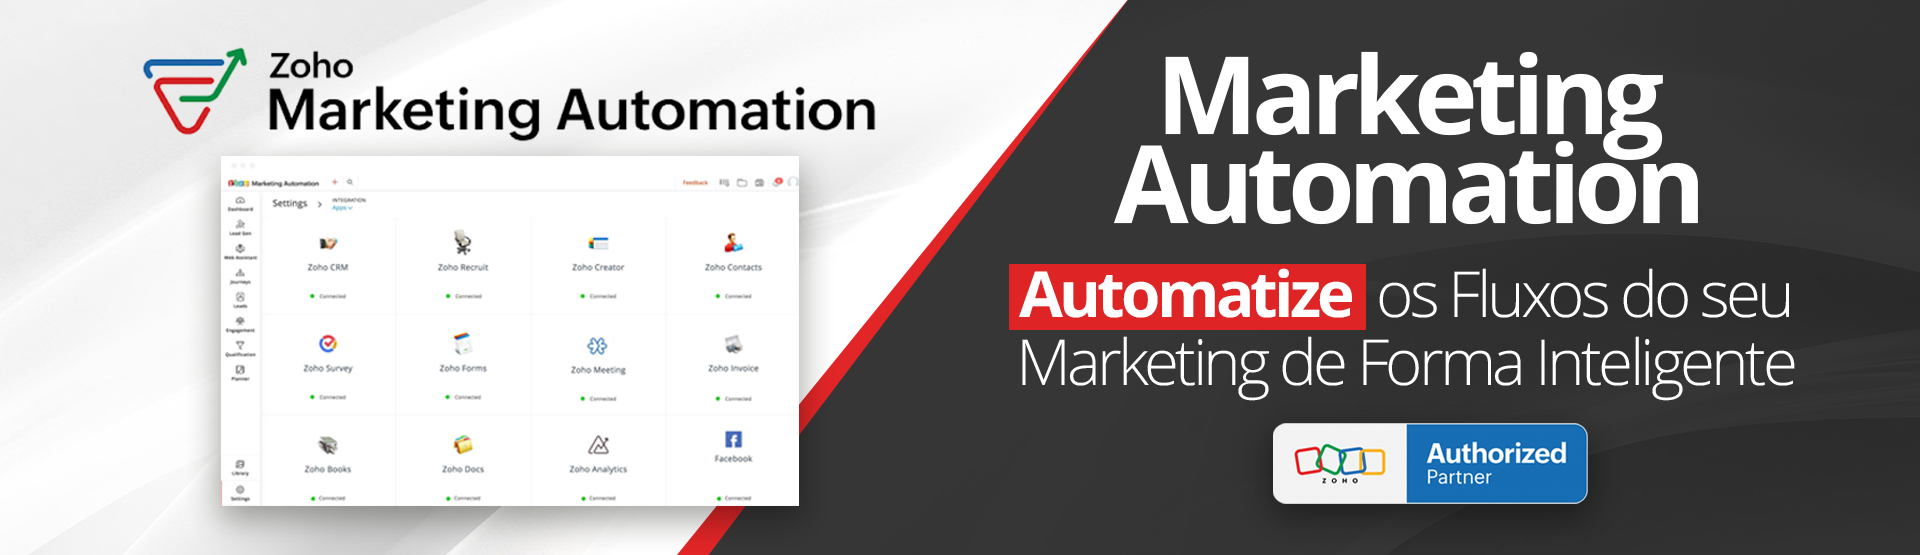 Banner Zoho Marketing Automation